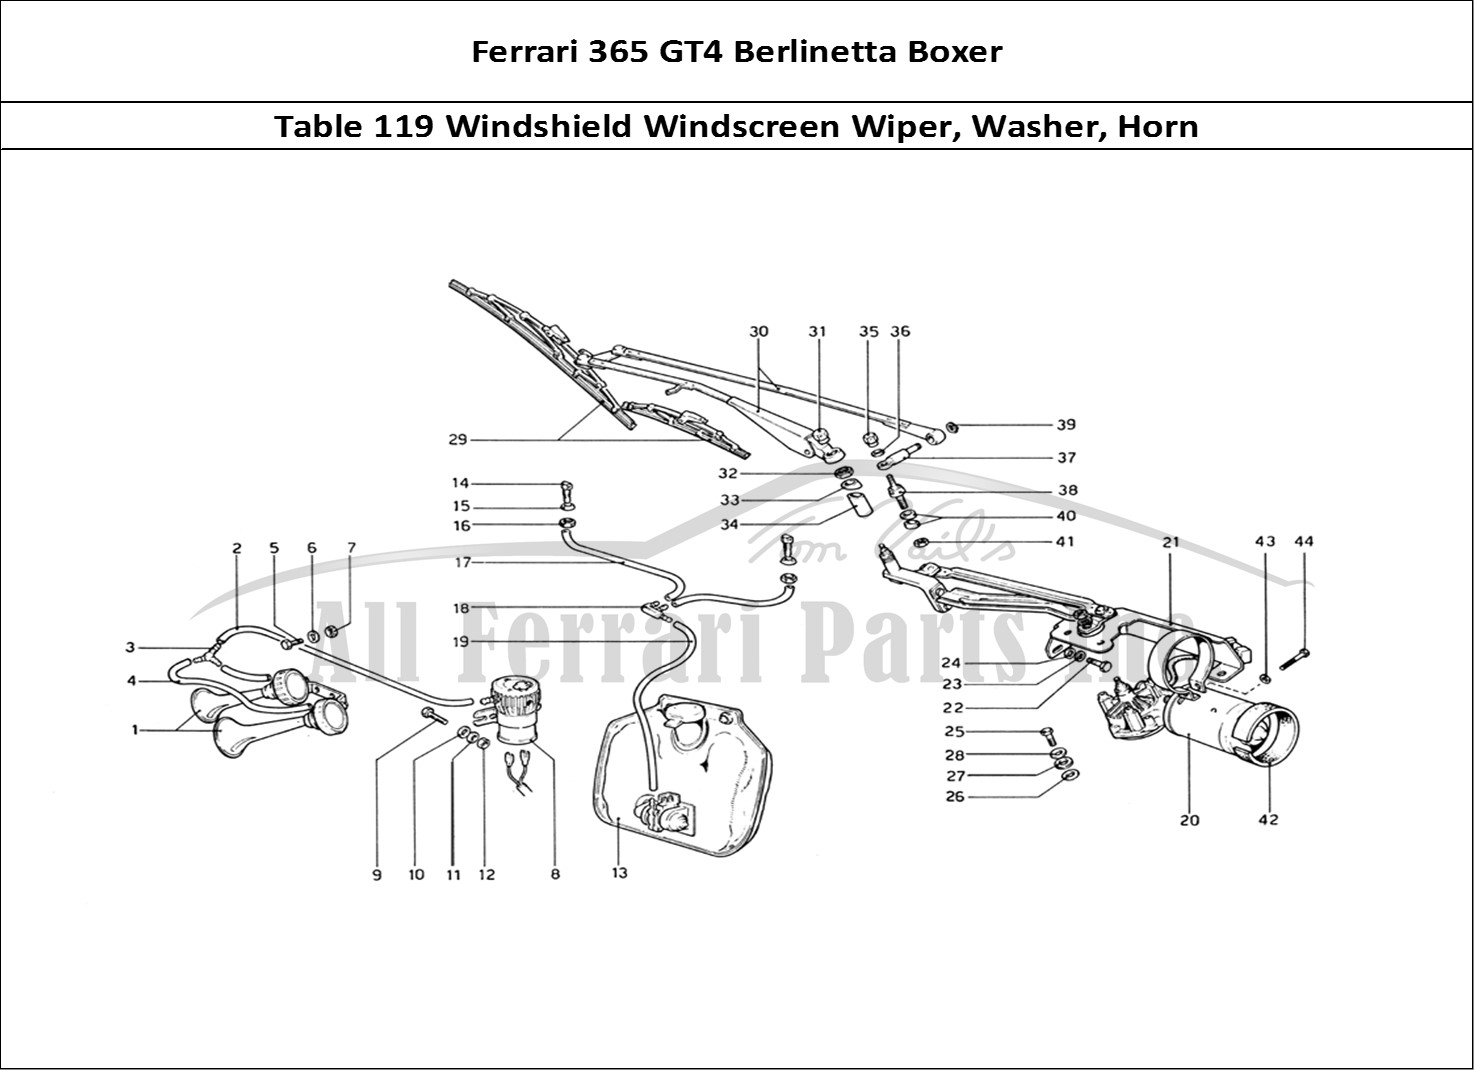 Ferrari Parts Ferrari 365 GT4 Berlinetta Boxer Page 119 Windshield Wiper, Washer